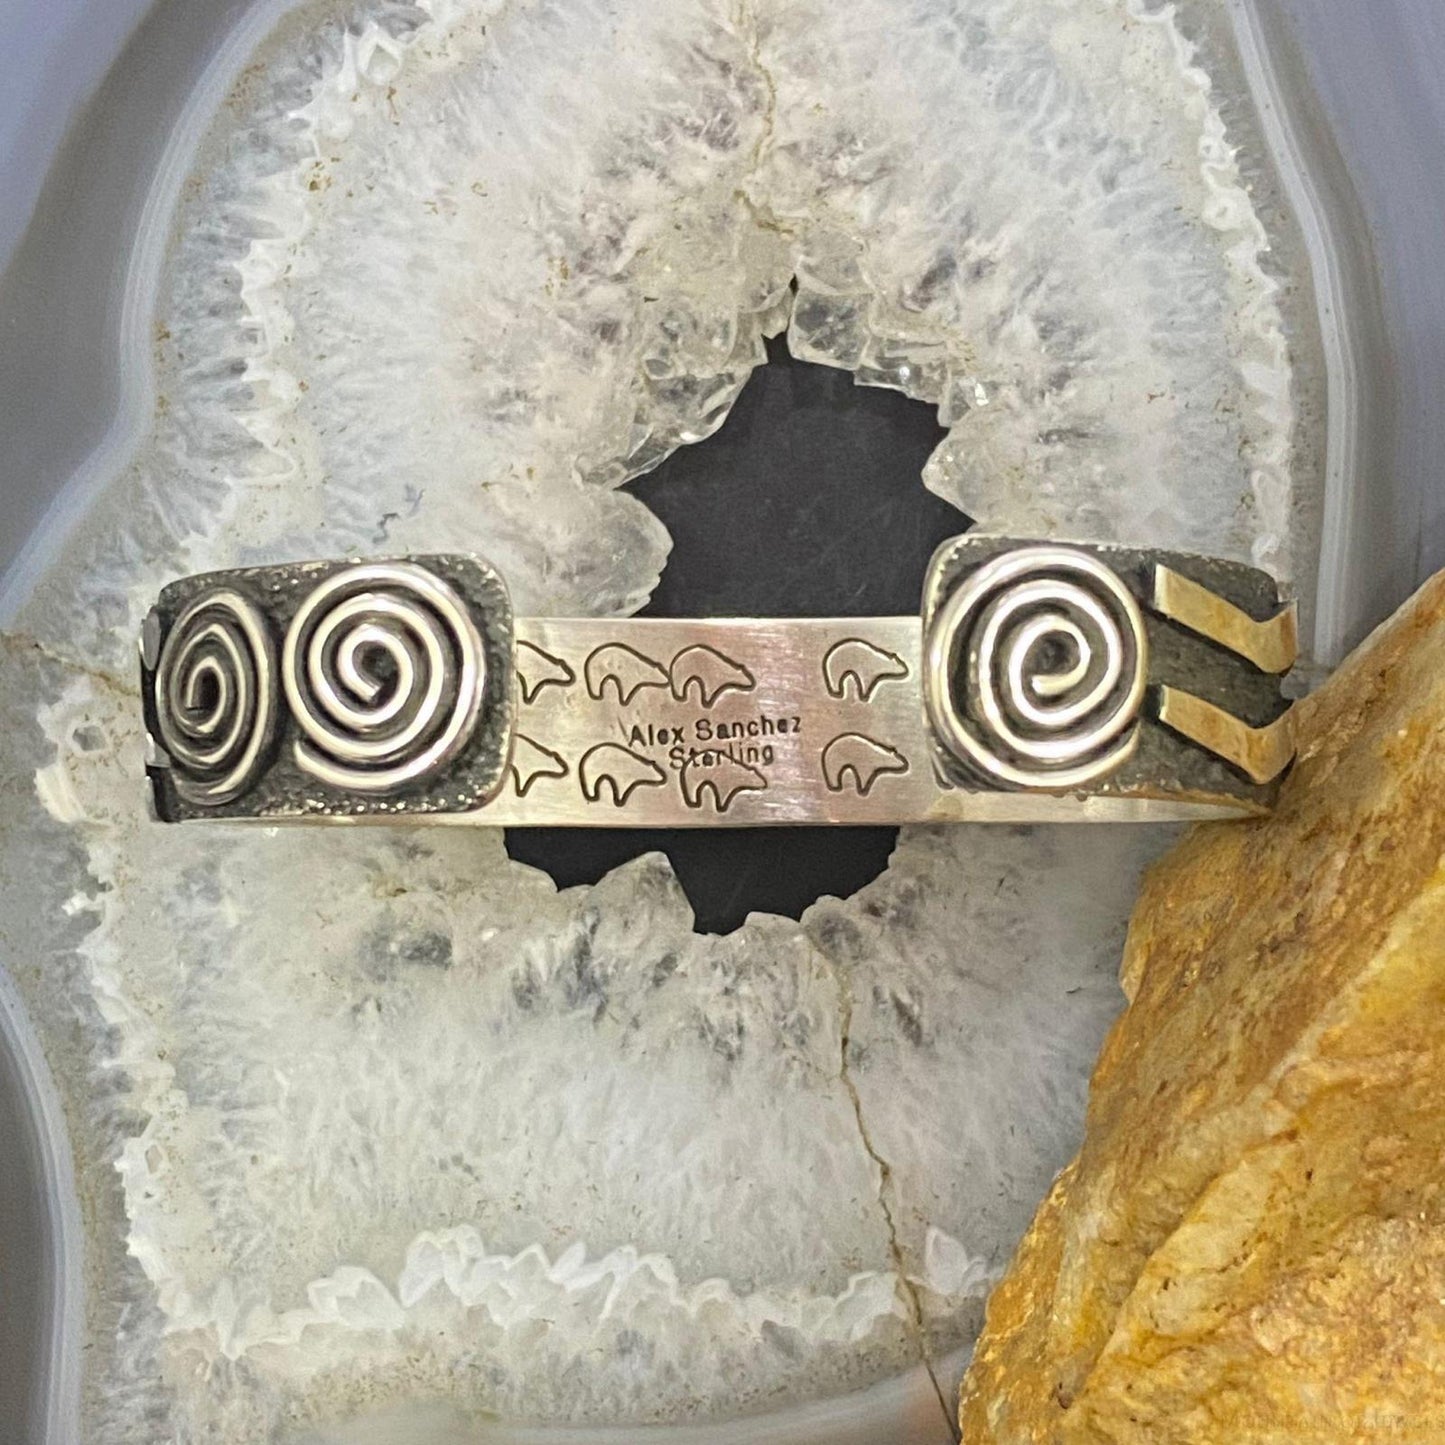 Alex Sanchez Native American Sterling Silver Petroglyph Bracelet For Women #4